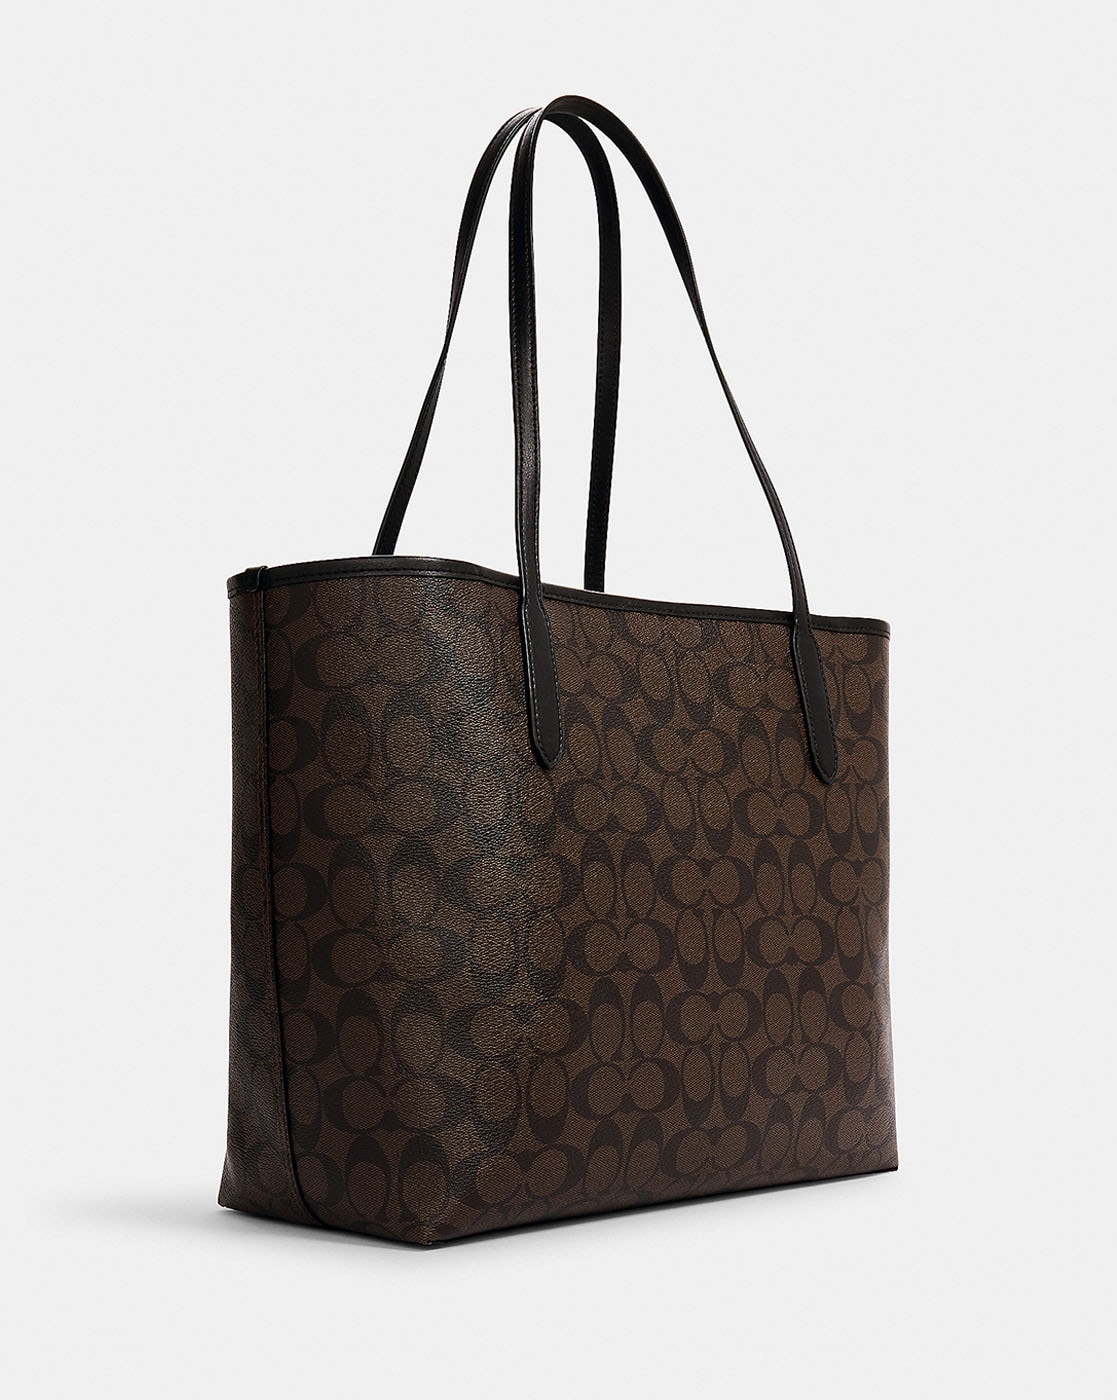 WOMEN COACH BAG NEW CHELSEA 32 BROWN VALUE $ 395 FOR $ 145 | eBay